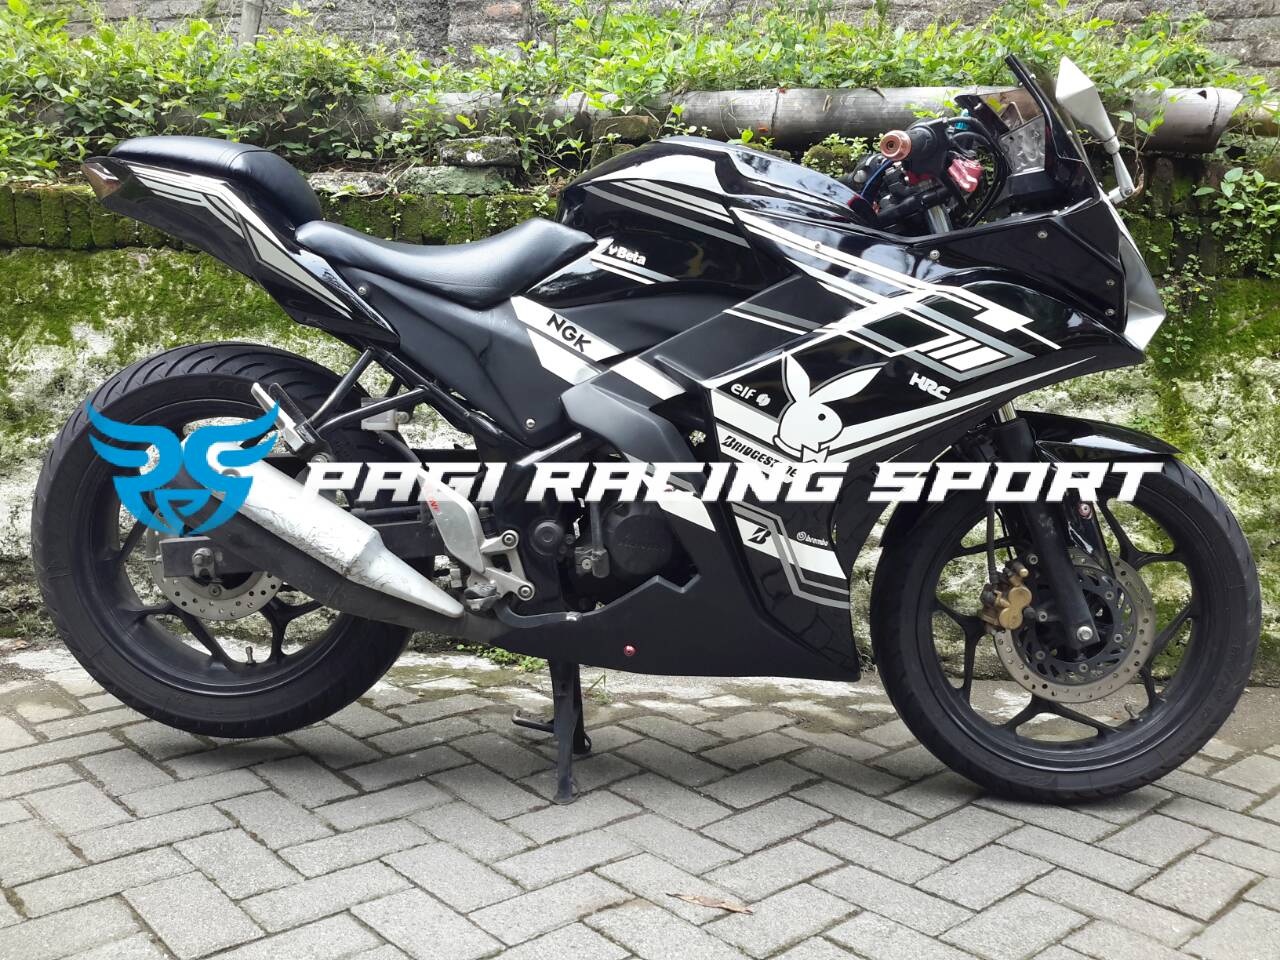 Body Belakang CB150R Ala Ninja 250 FI Pagi Racing Sport